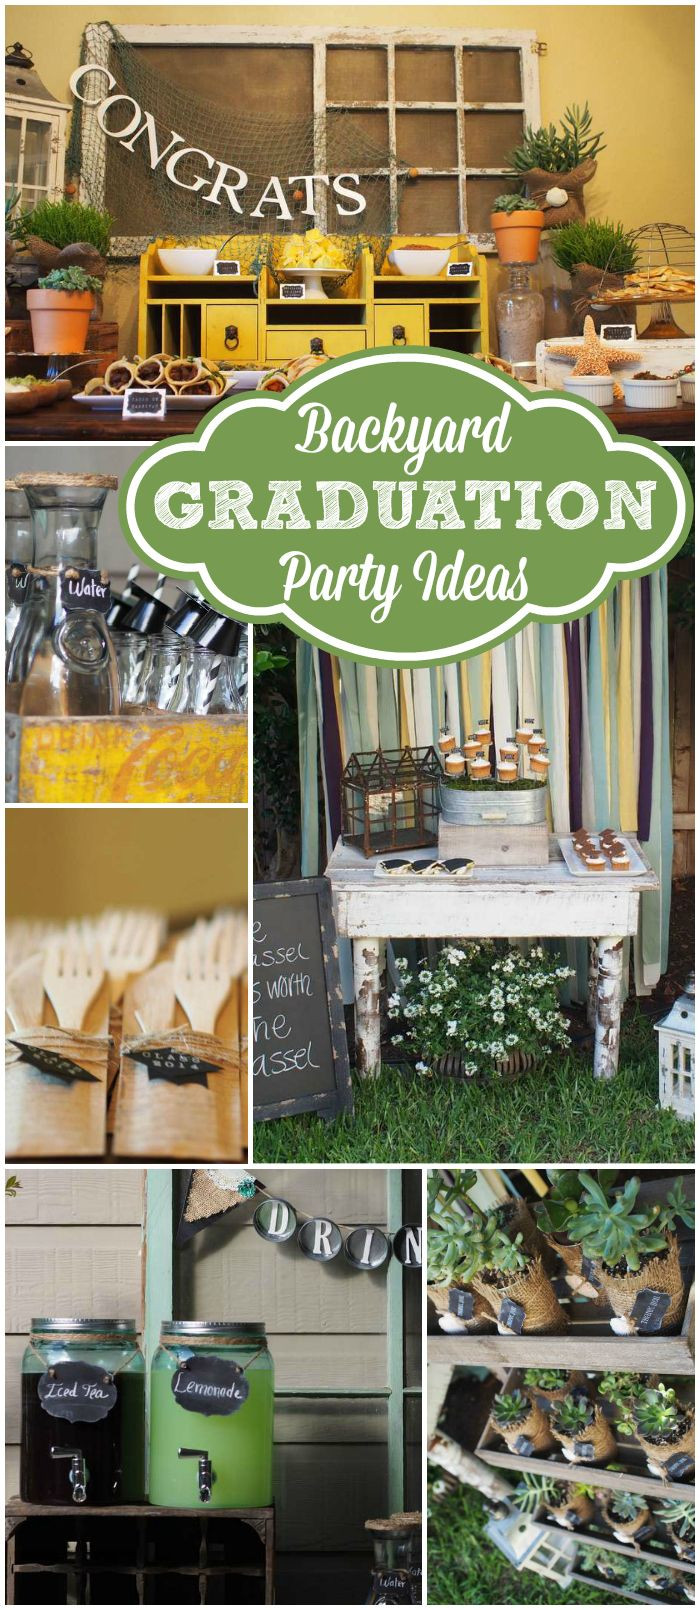 Garden Graduation Party Ideas
 Graduation and ocean Graduation End of School "Backyard